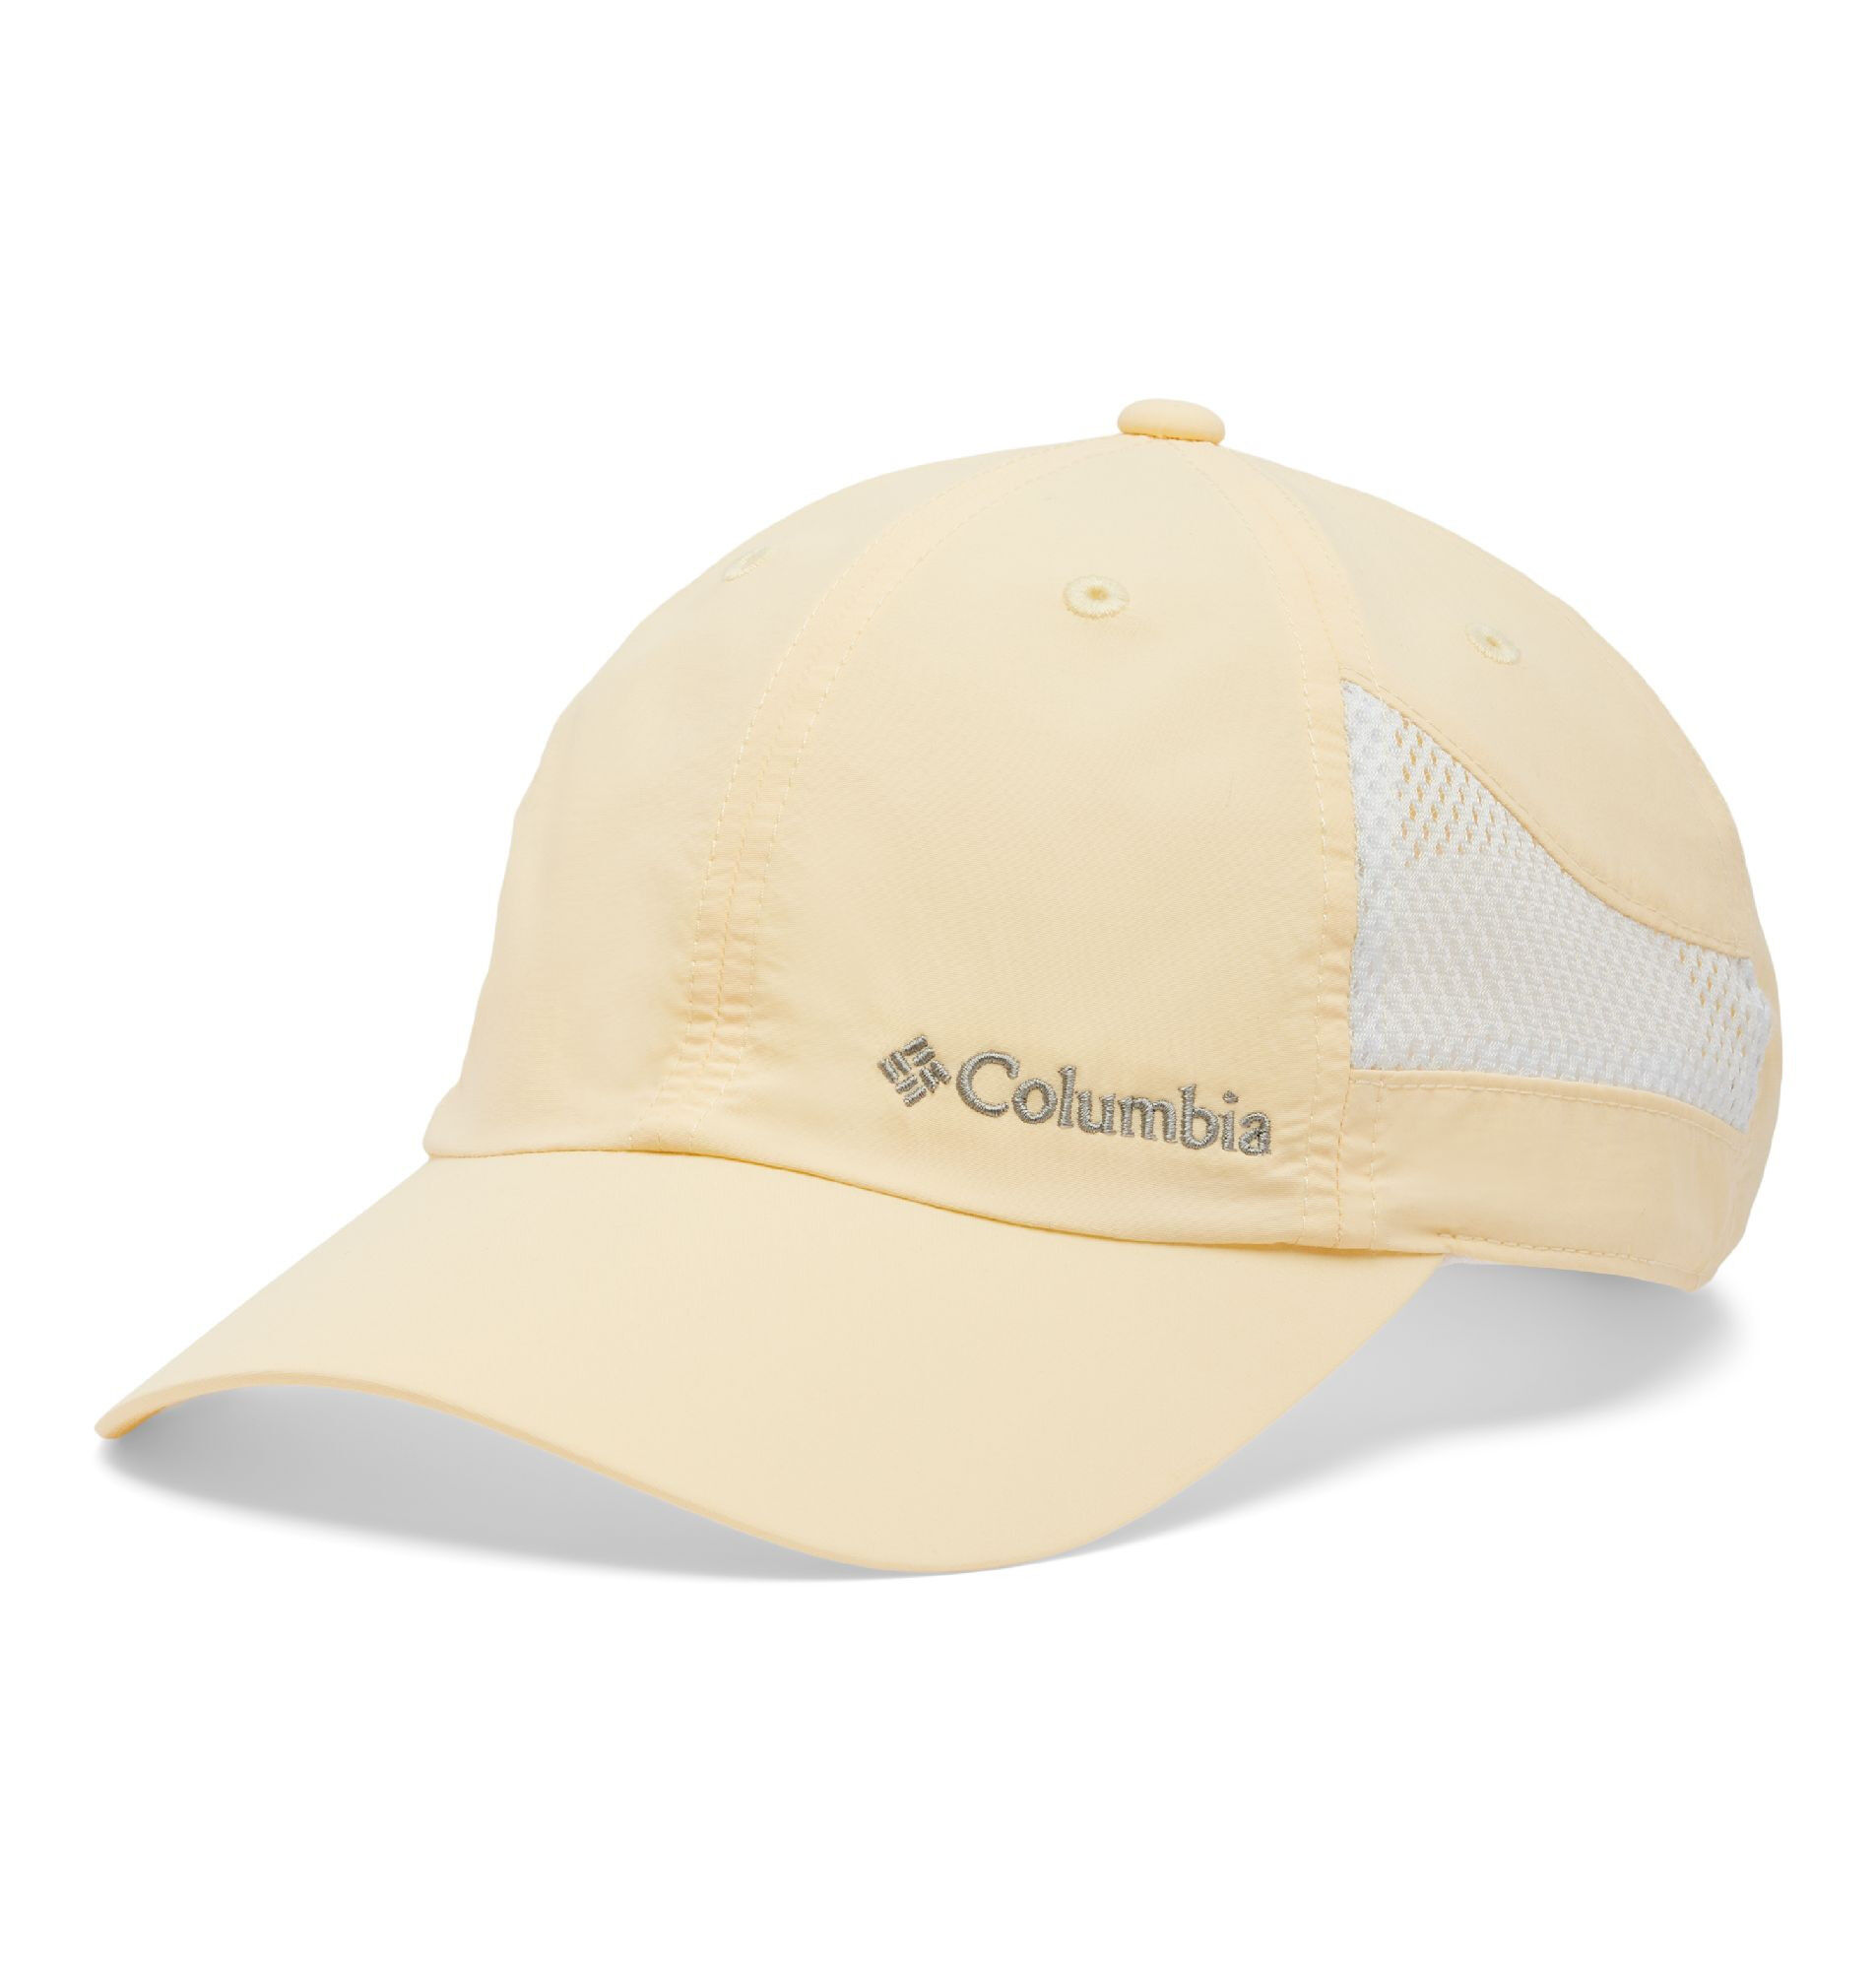 Columbia Tech Shade Hat - Lippalakki